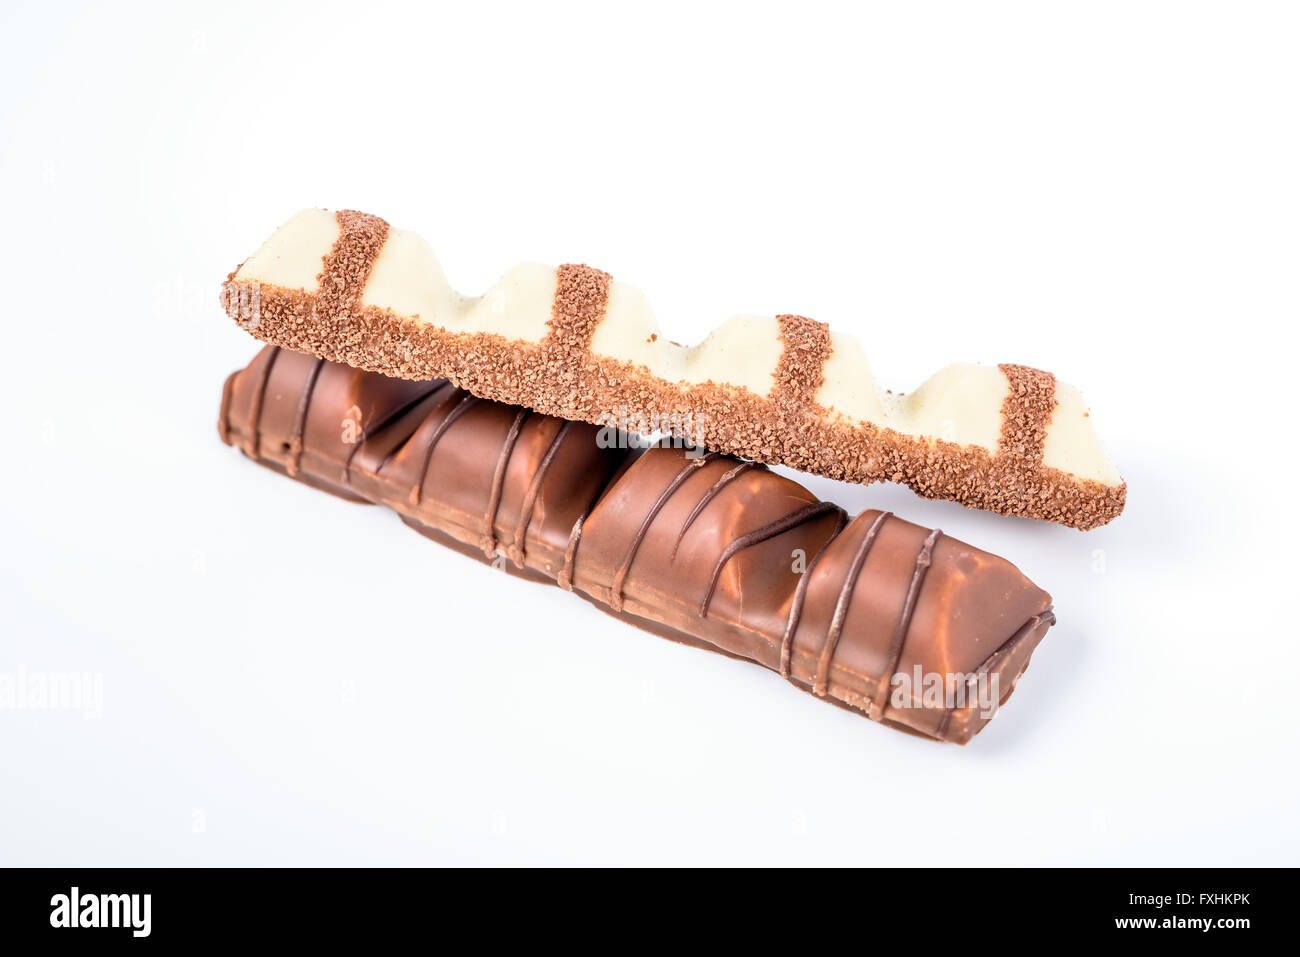 Chocolate Bars On White Background Stock Photo